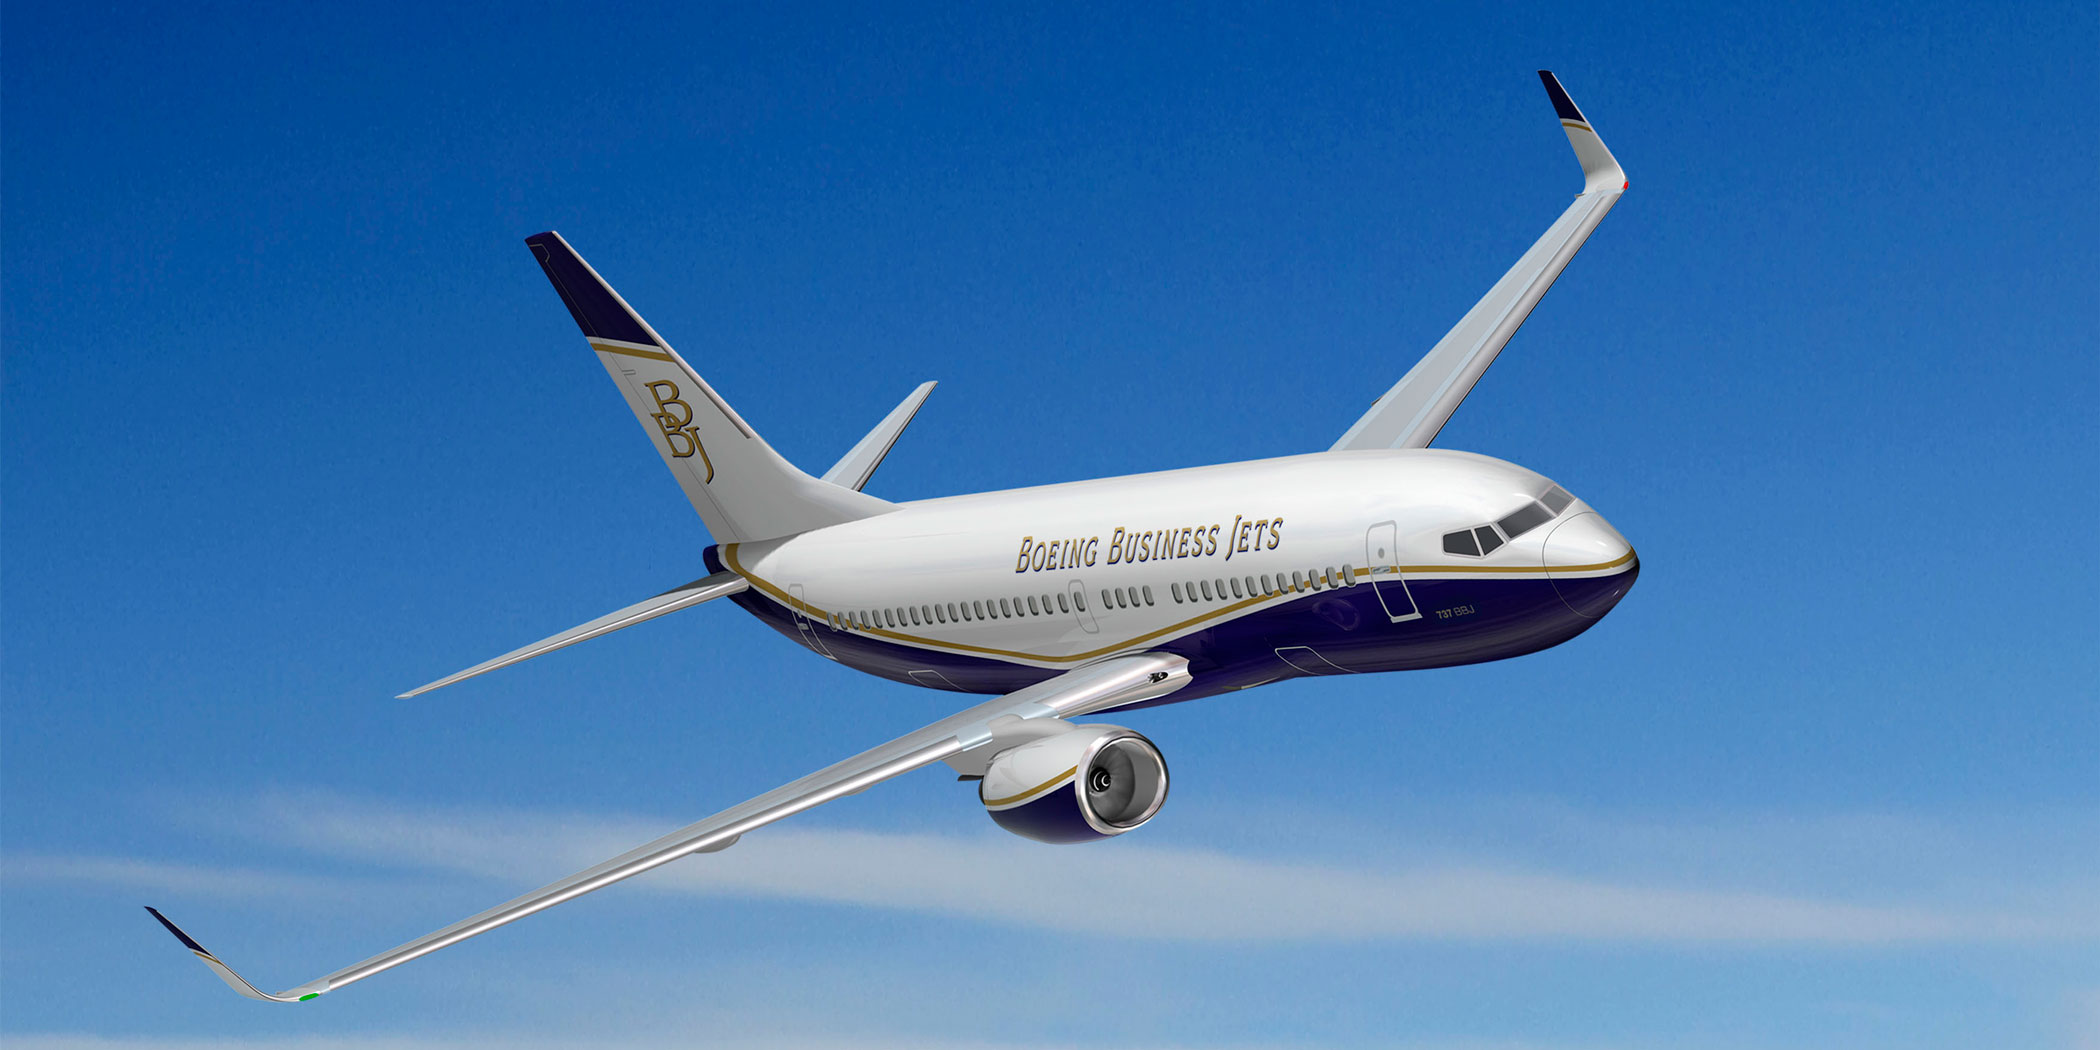 Boeing Business Jet flying